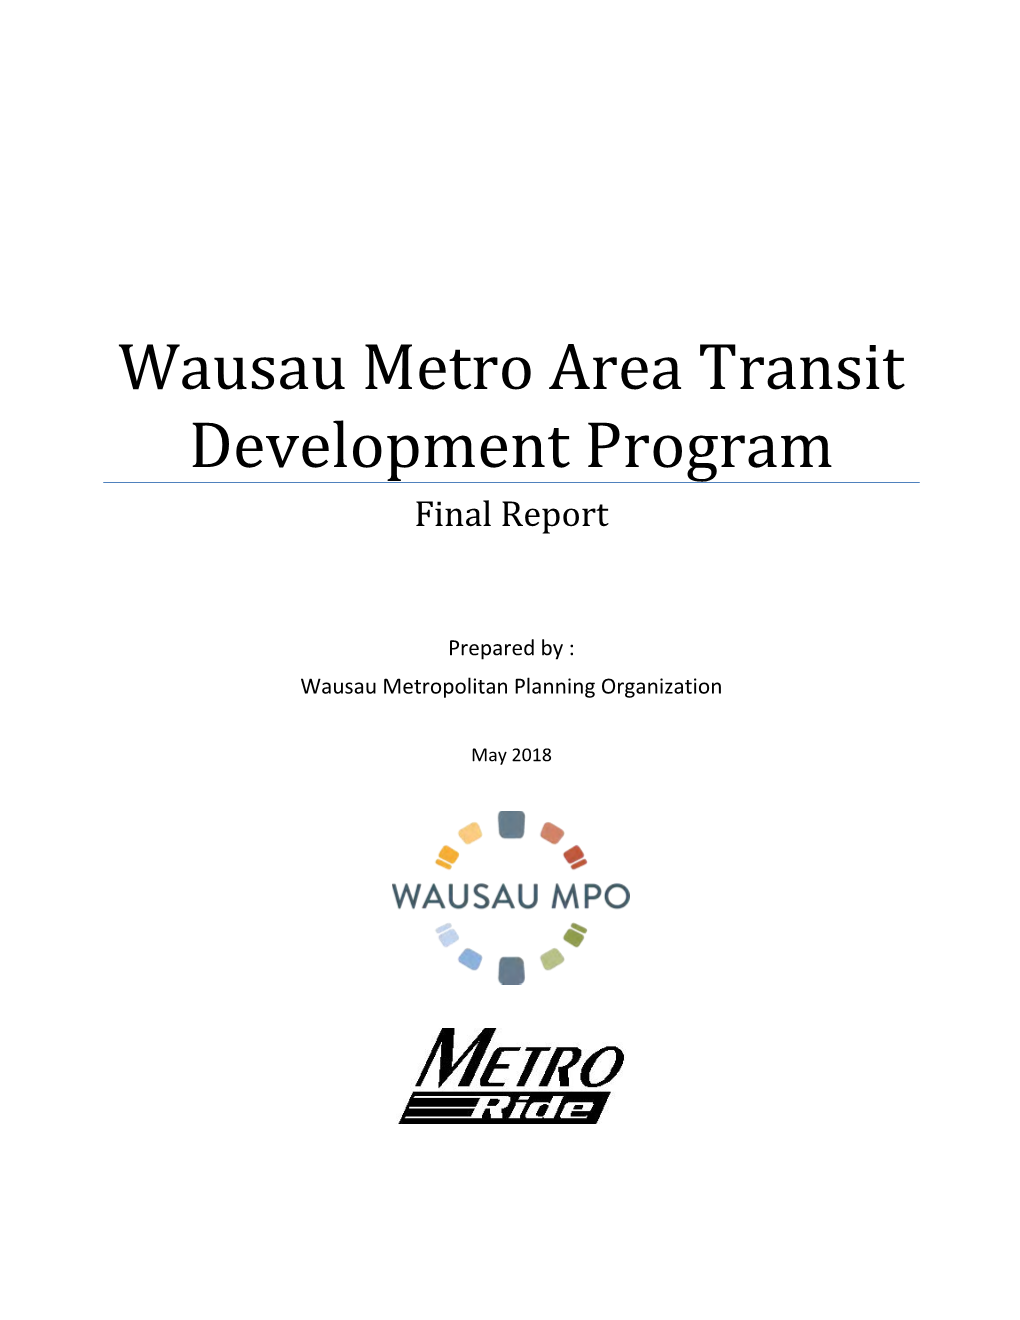 Wausau Metro Area Transit Development Program Final Report